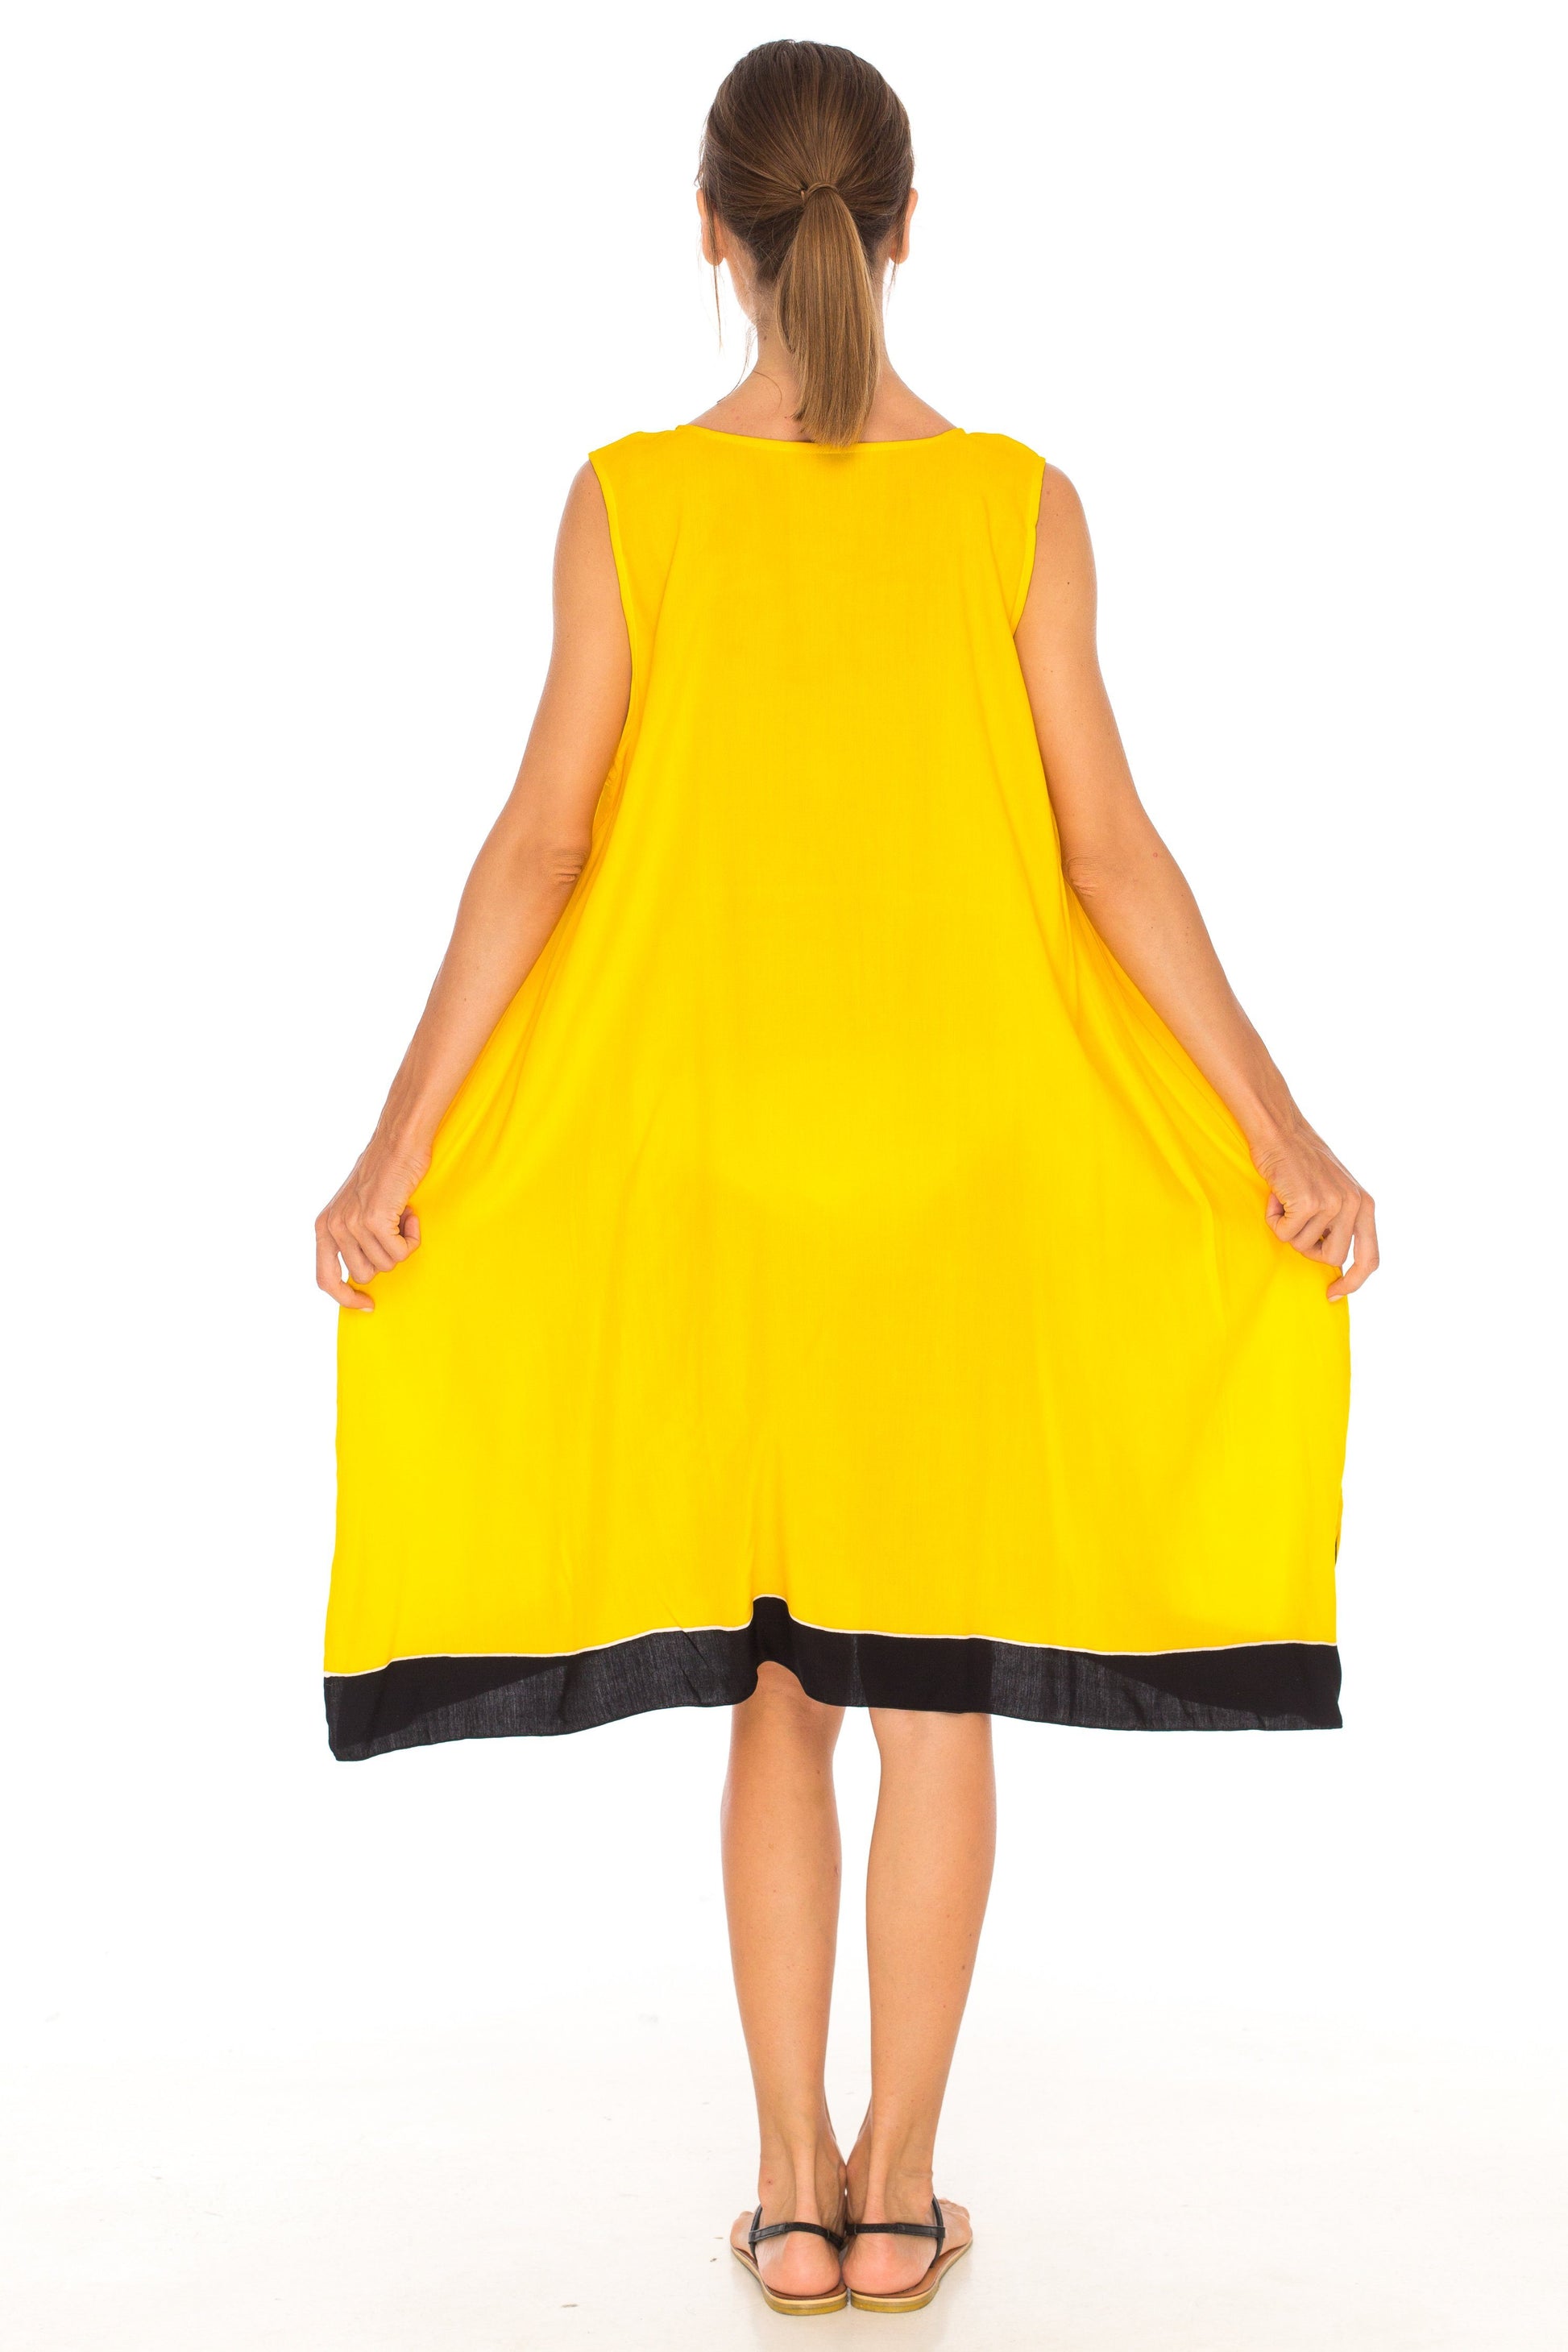 Hand Painted Tribal Design Short sleeveless summer Dress Love-Shu-Shi-yellow